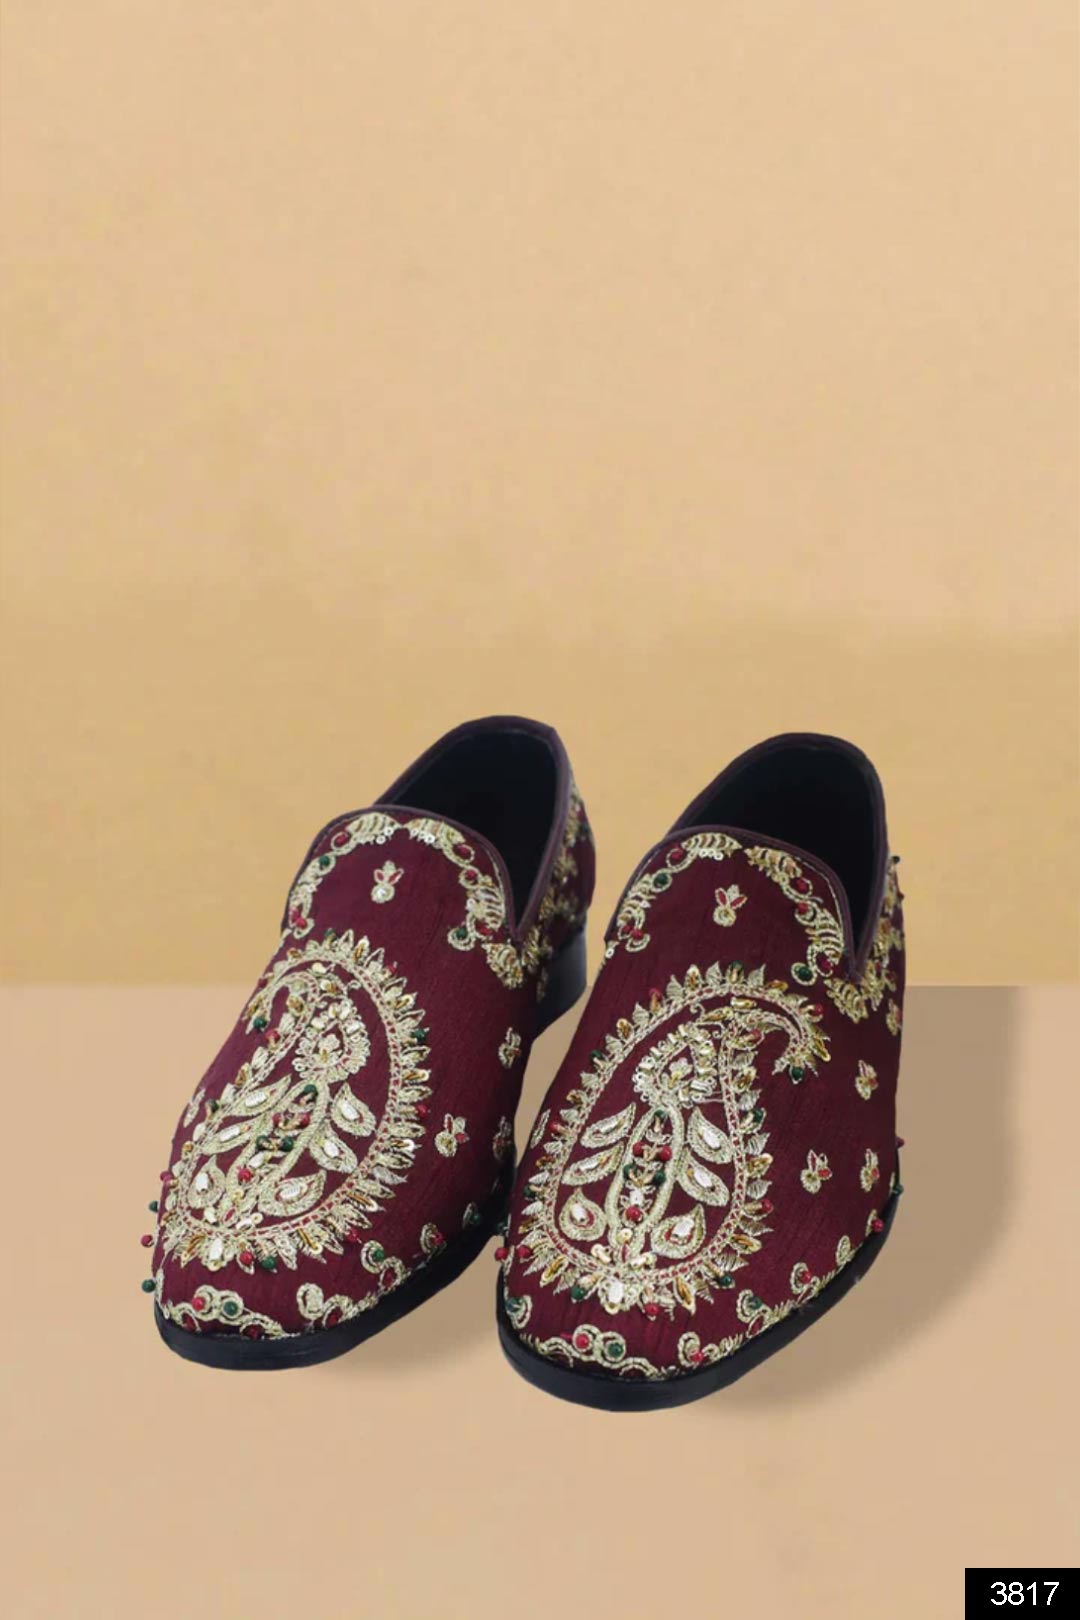 Bayrau Embellished Shoes